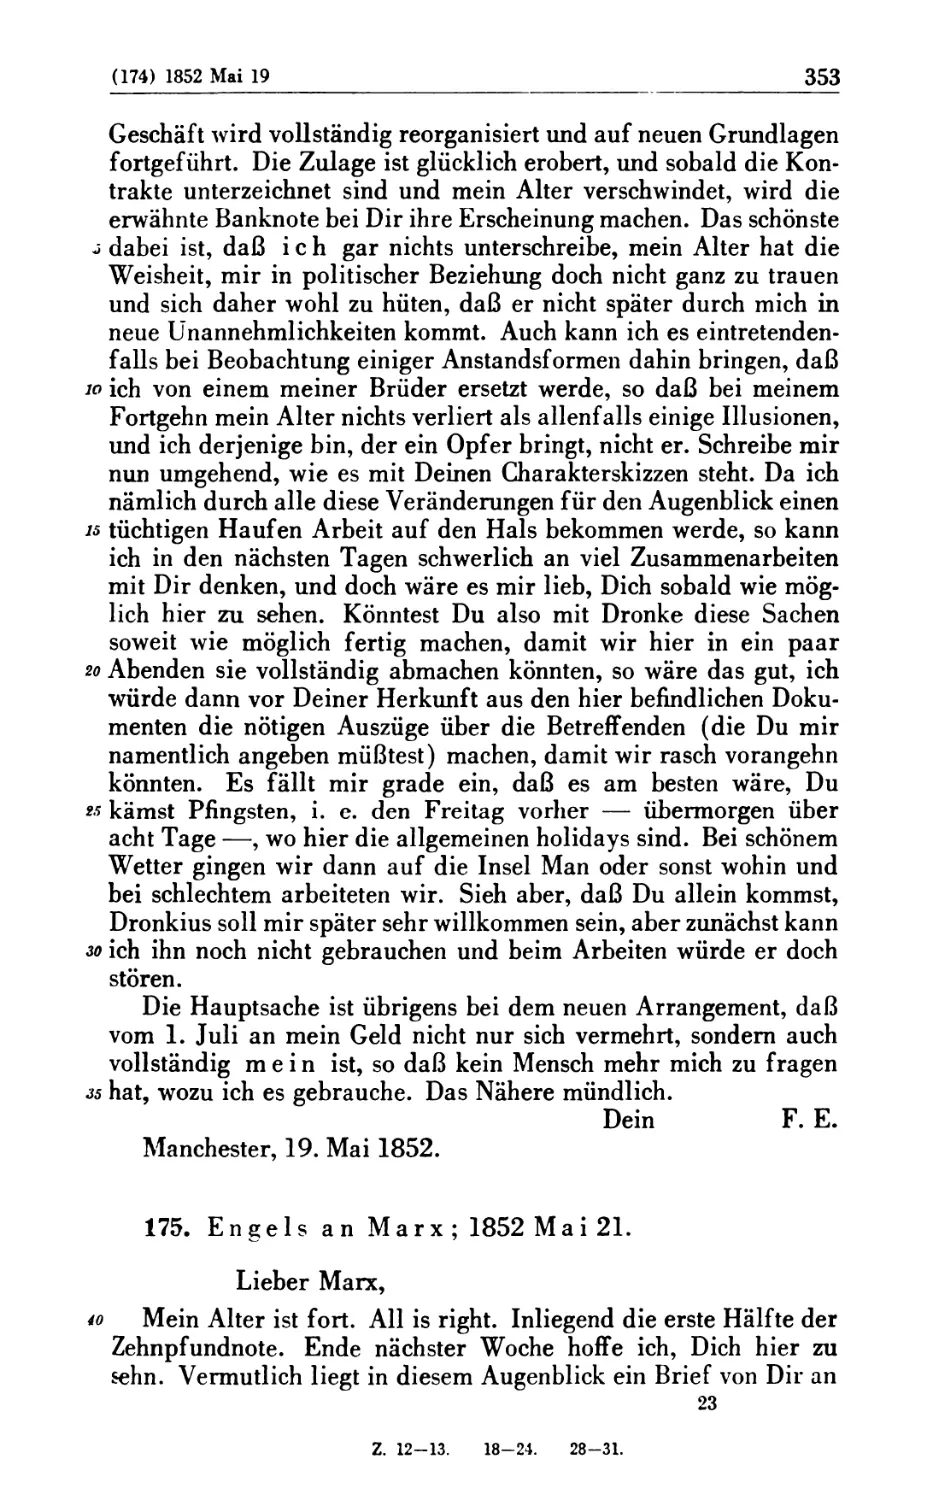 175. Engels an Marx; 1852 Mai 21